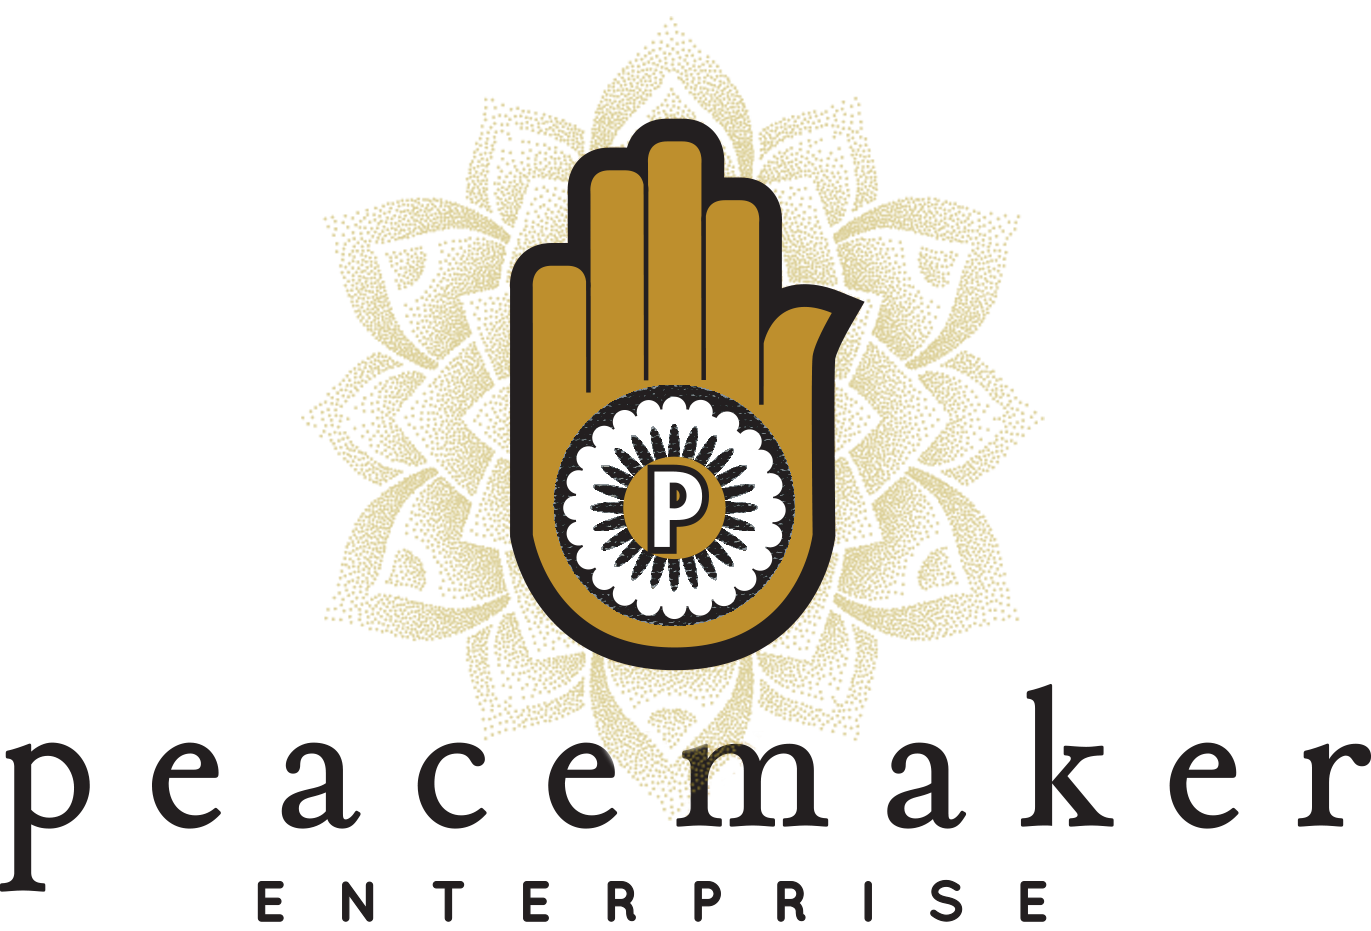 Peacemaker Enterprise